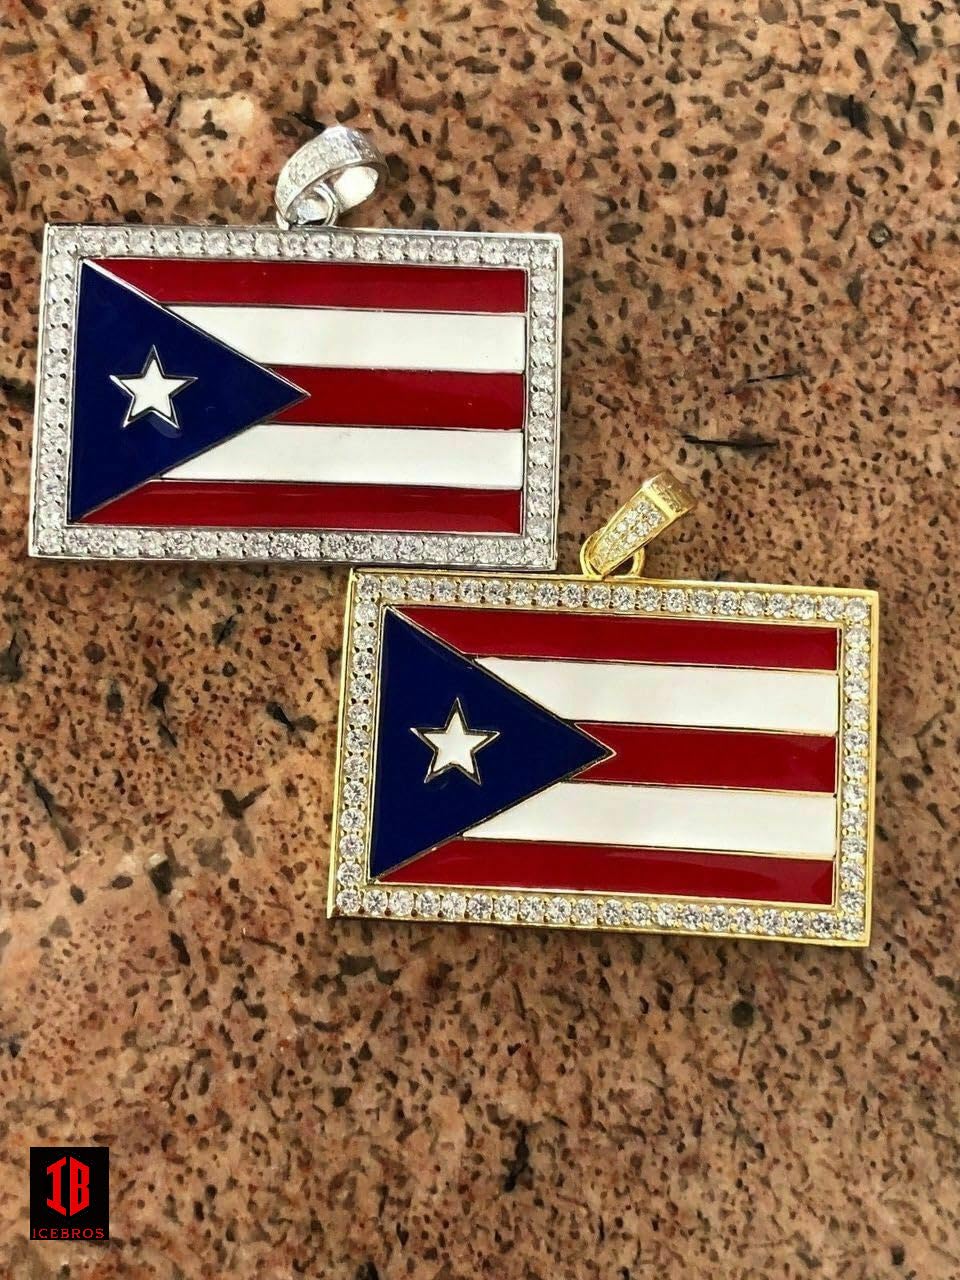 ICEBROS 925 Silver Puerto Rico Enamel Flag Pendant 2